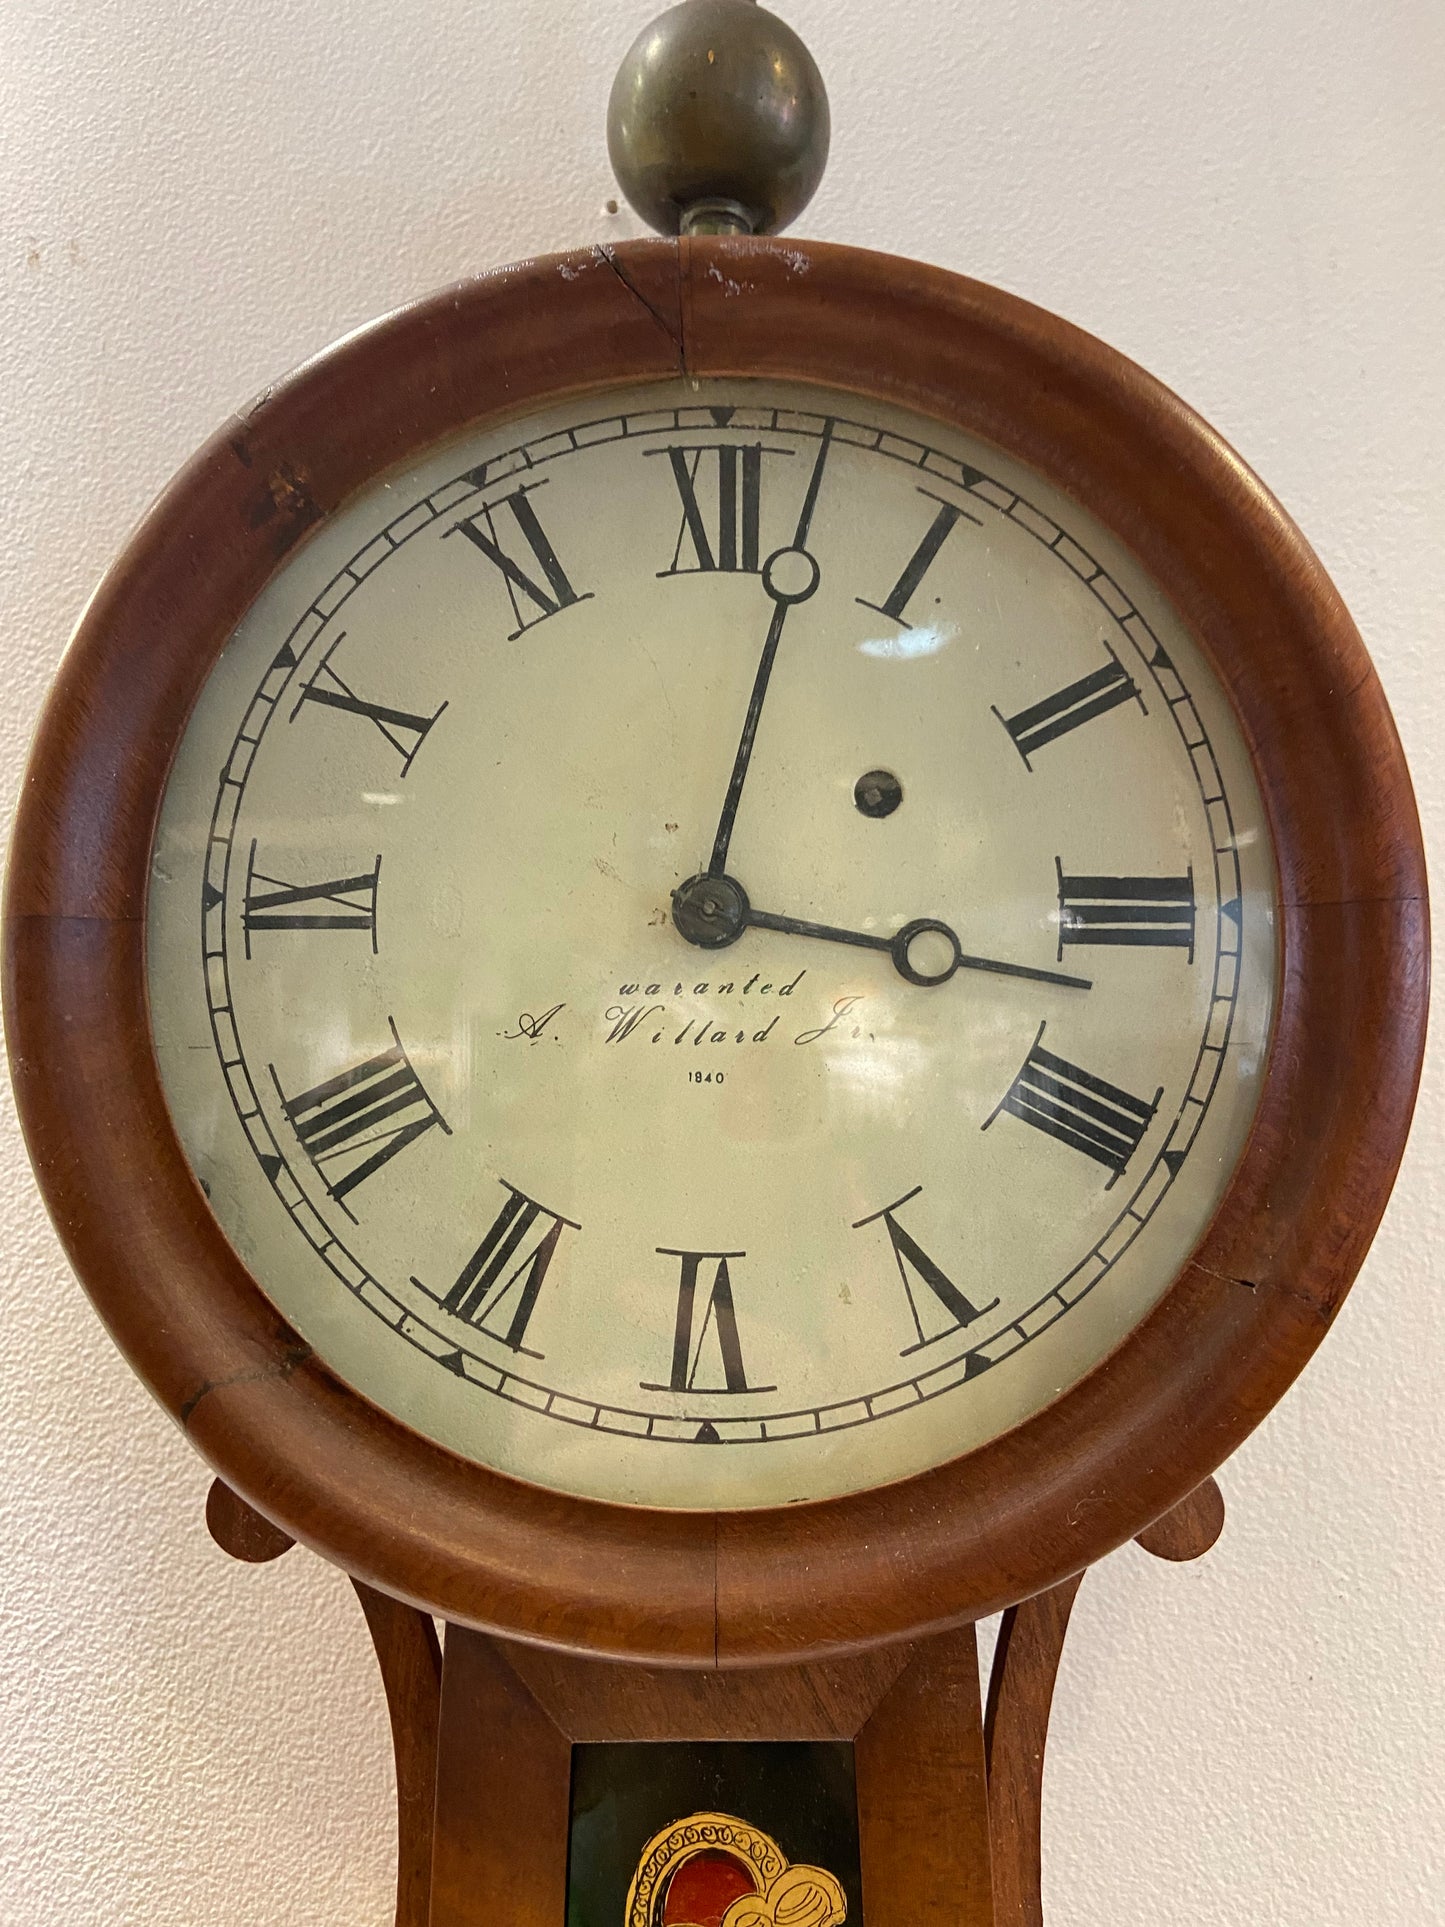 Antique Aaron Willard Jr. Banjo Wall Clock (26019)